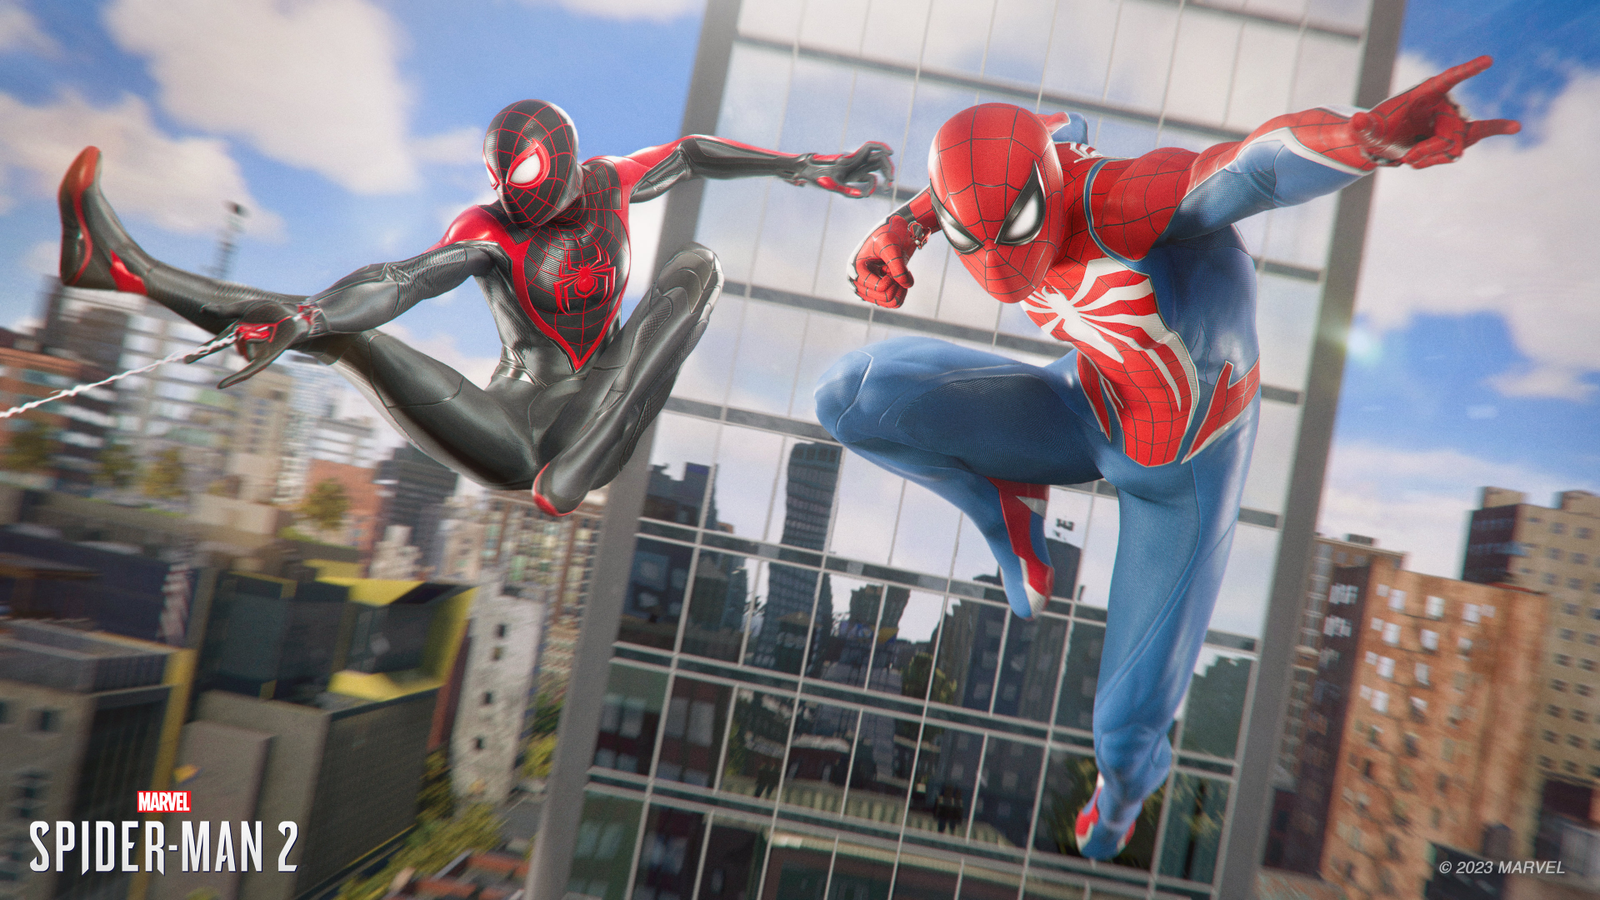 New Spider-Man 2 trailer reveals hench Venom and returning foes